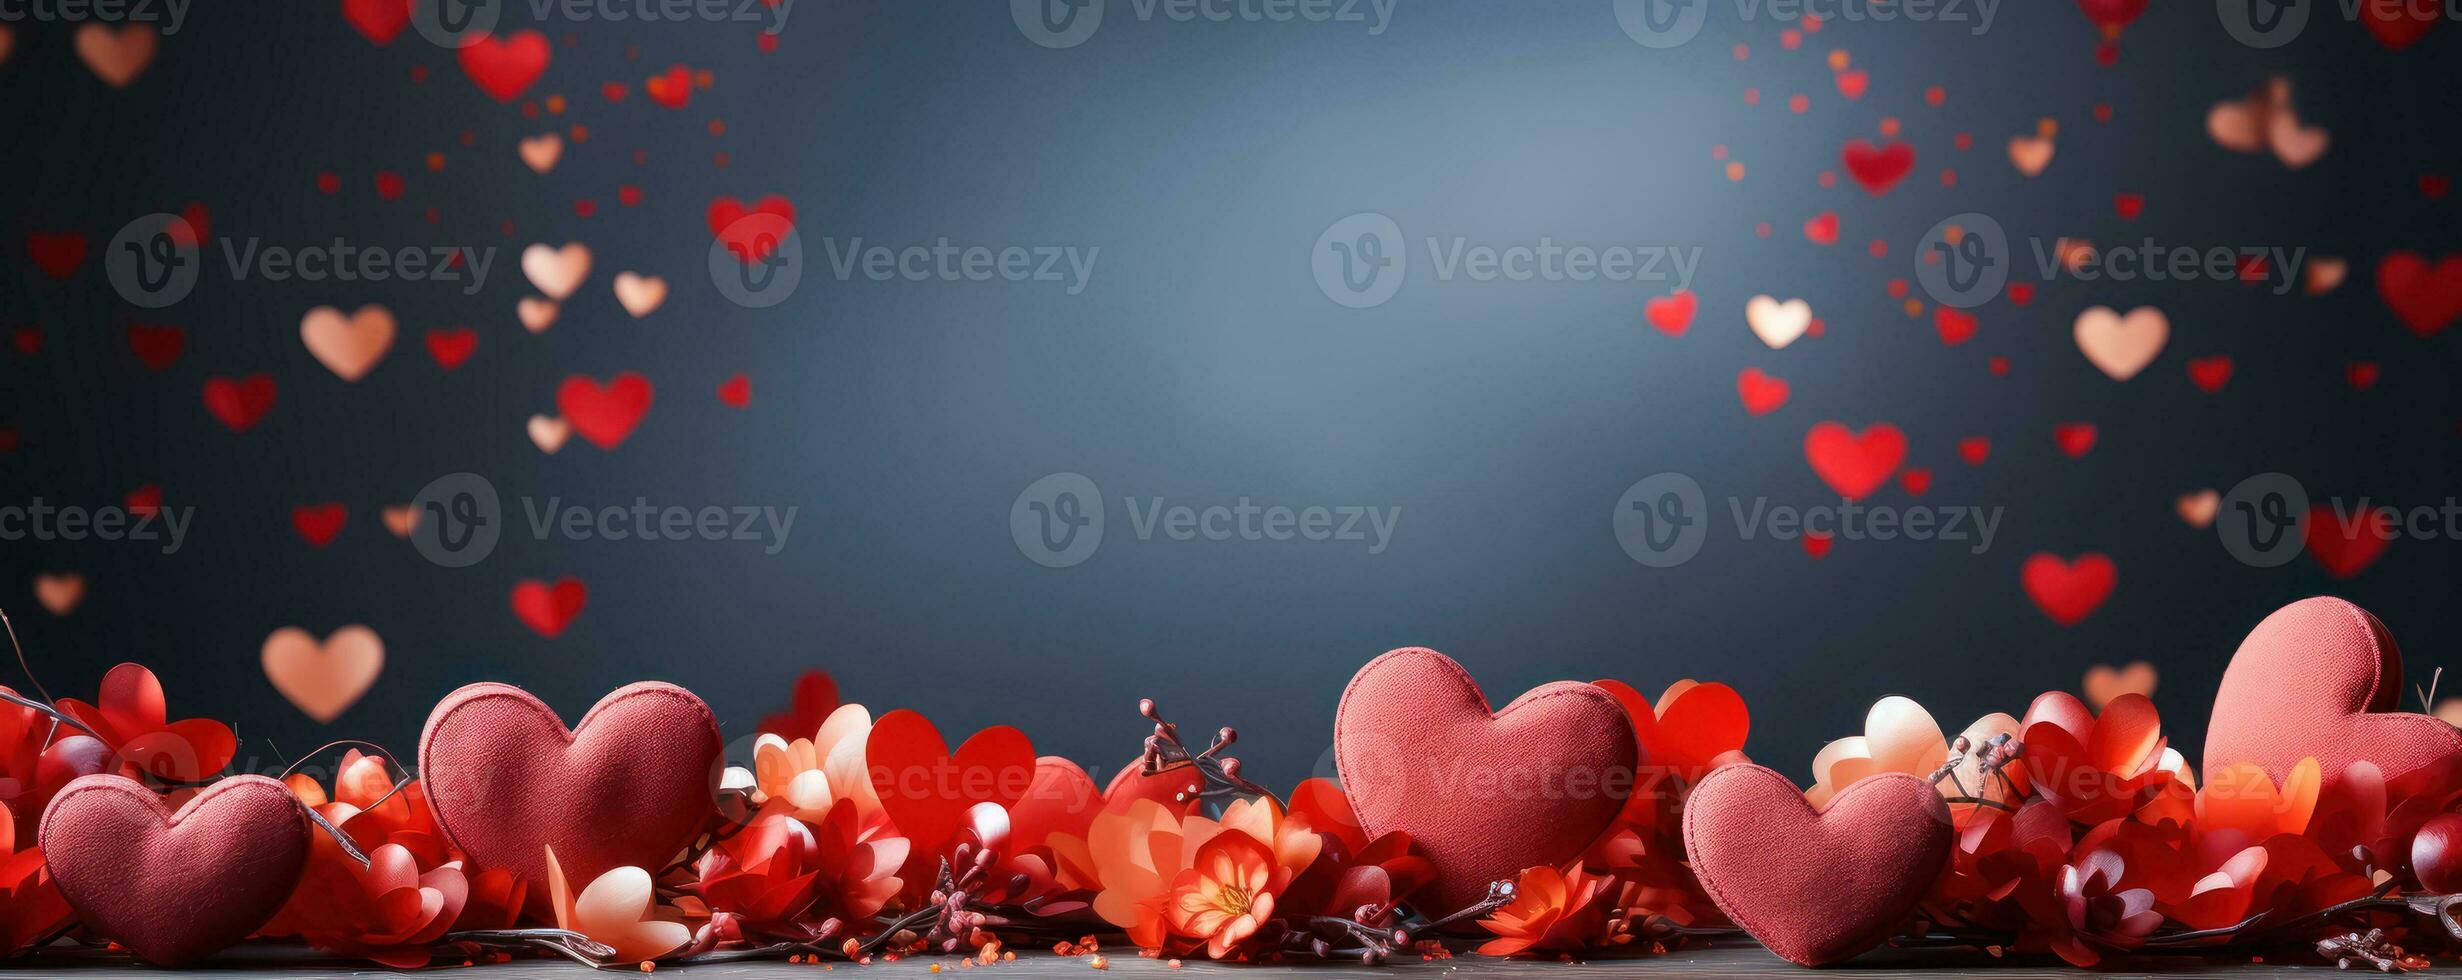 AI generated Dreamy Love - Stylish Valentine's Day Celebration Background photo